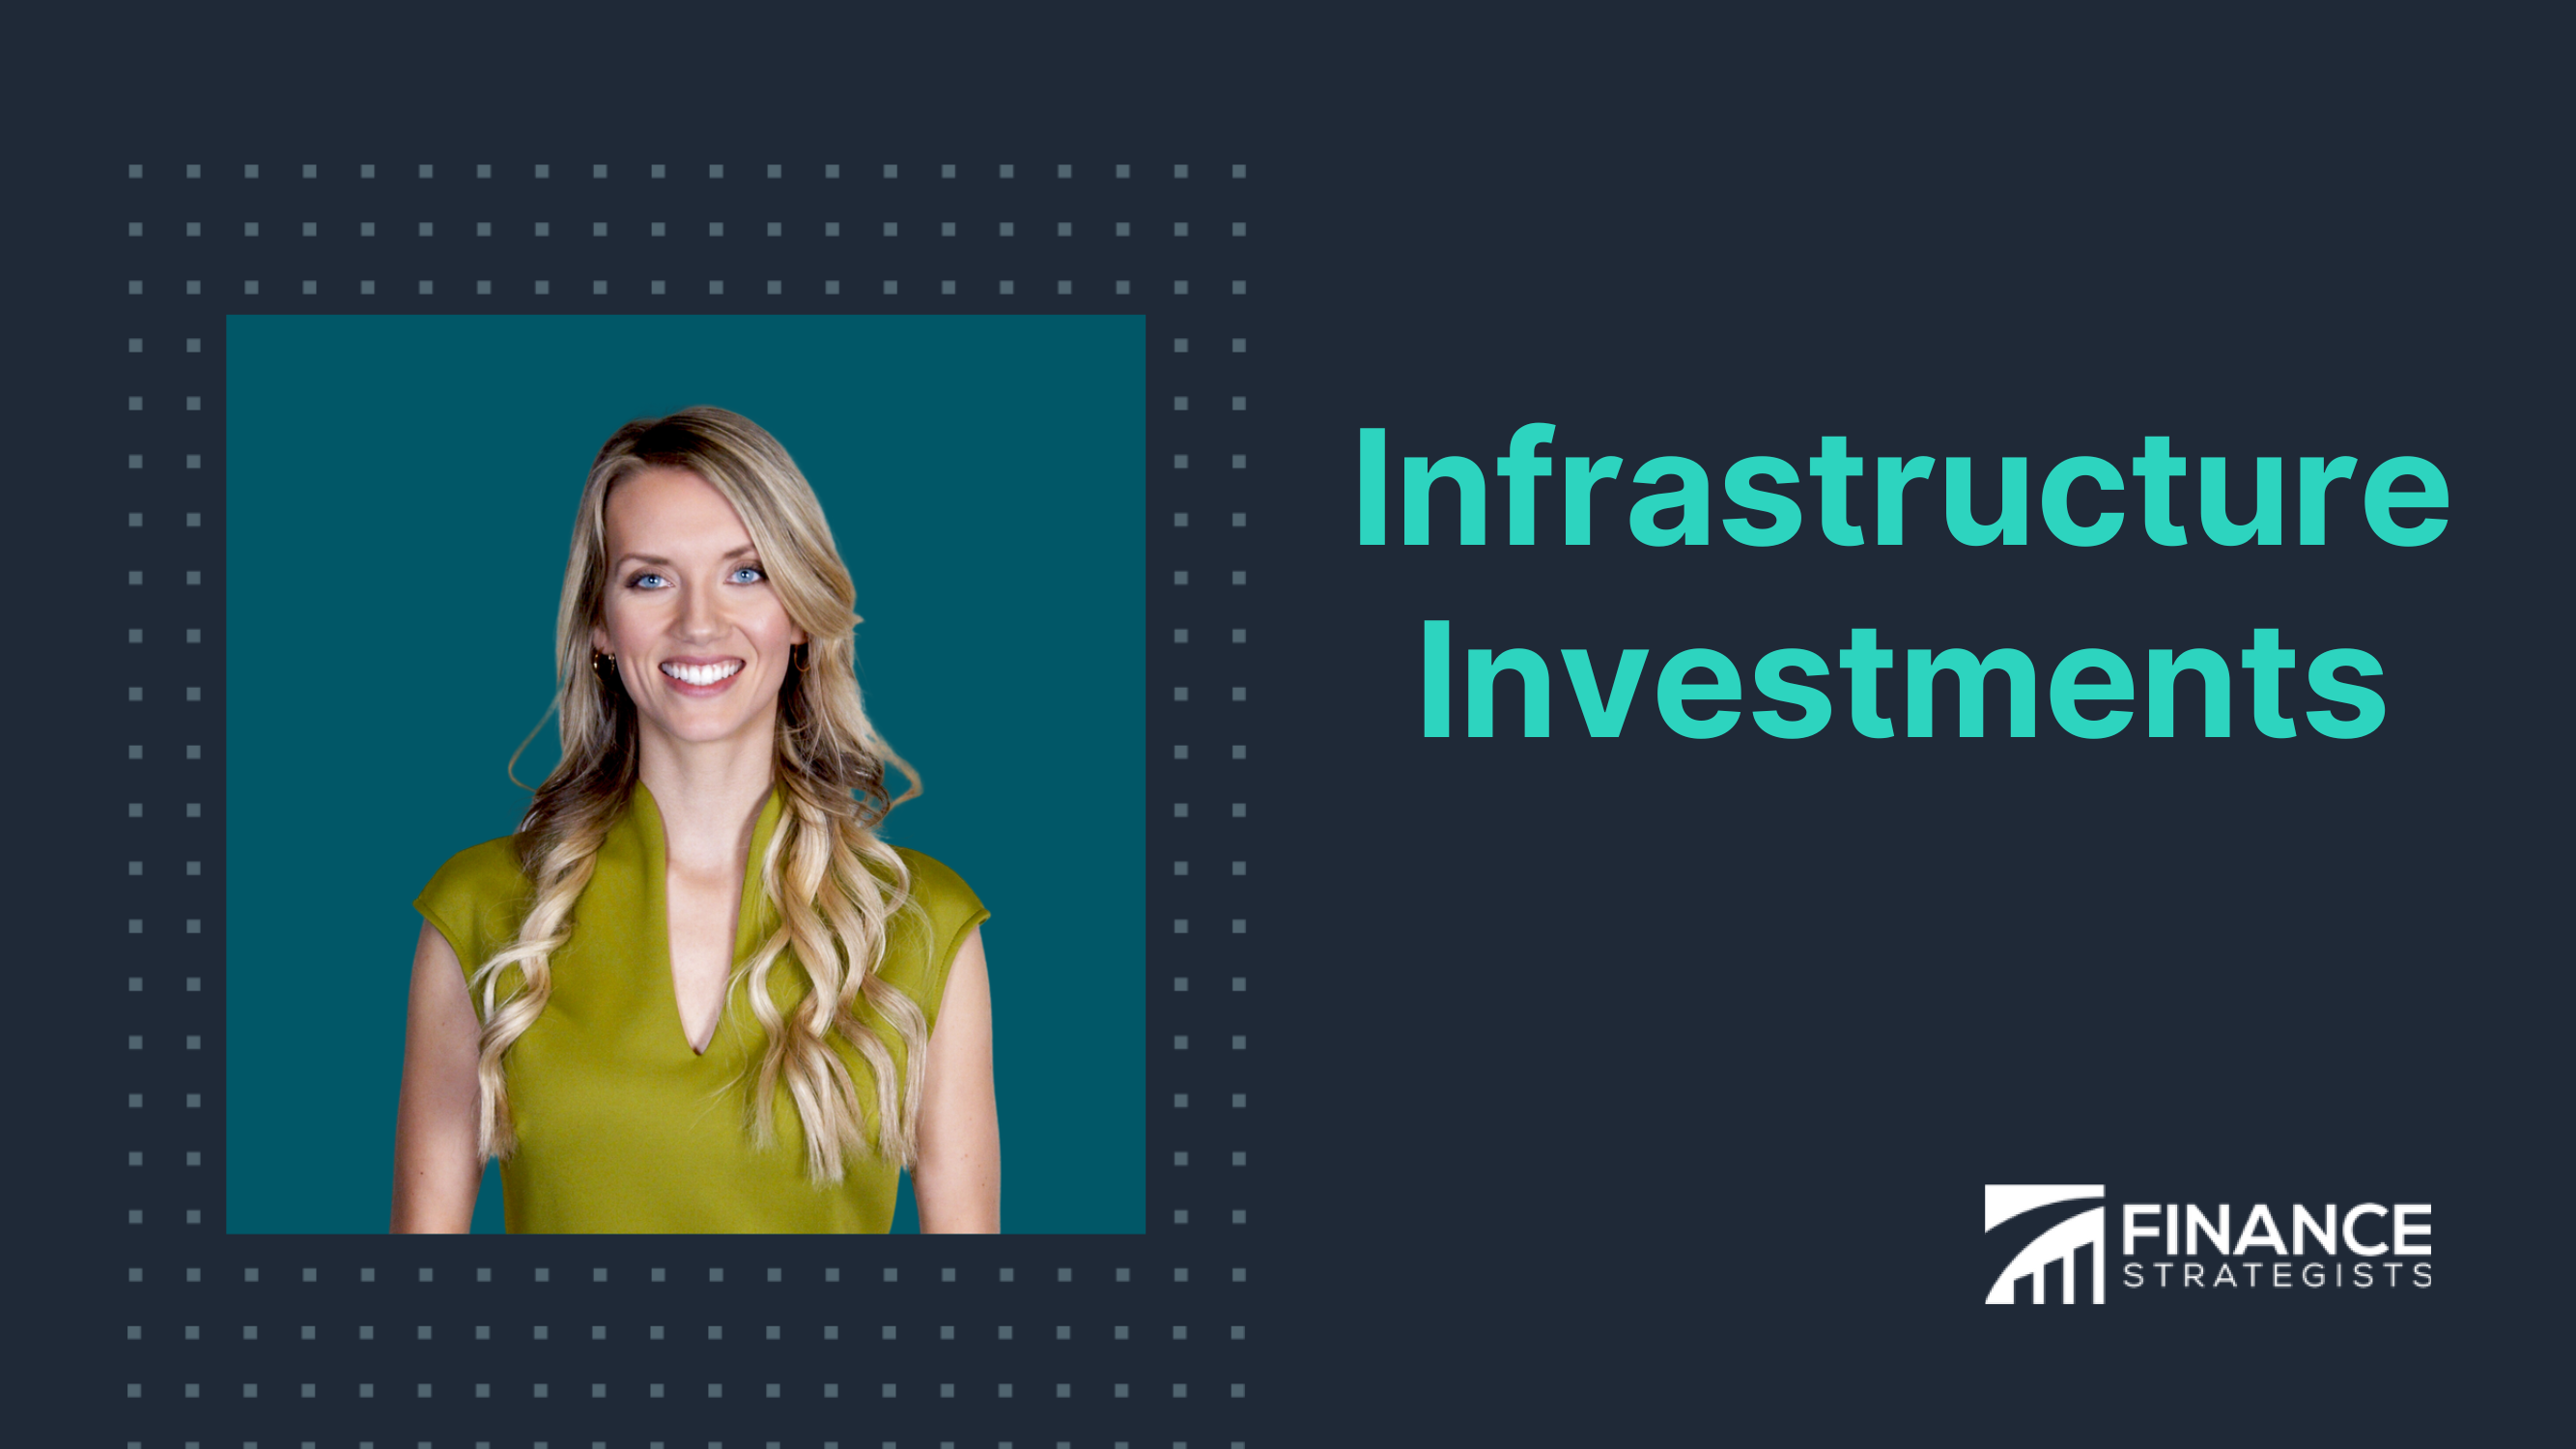 Inversiones en infraestructura